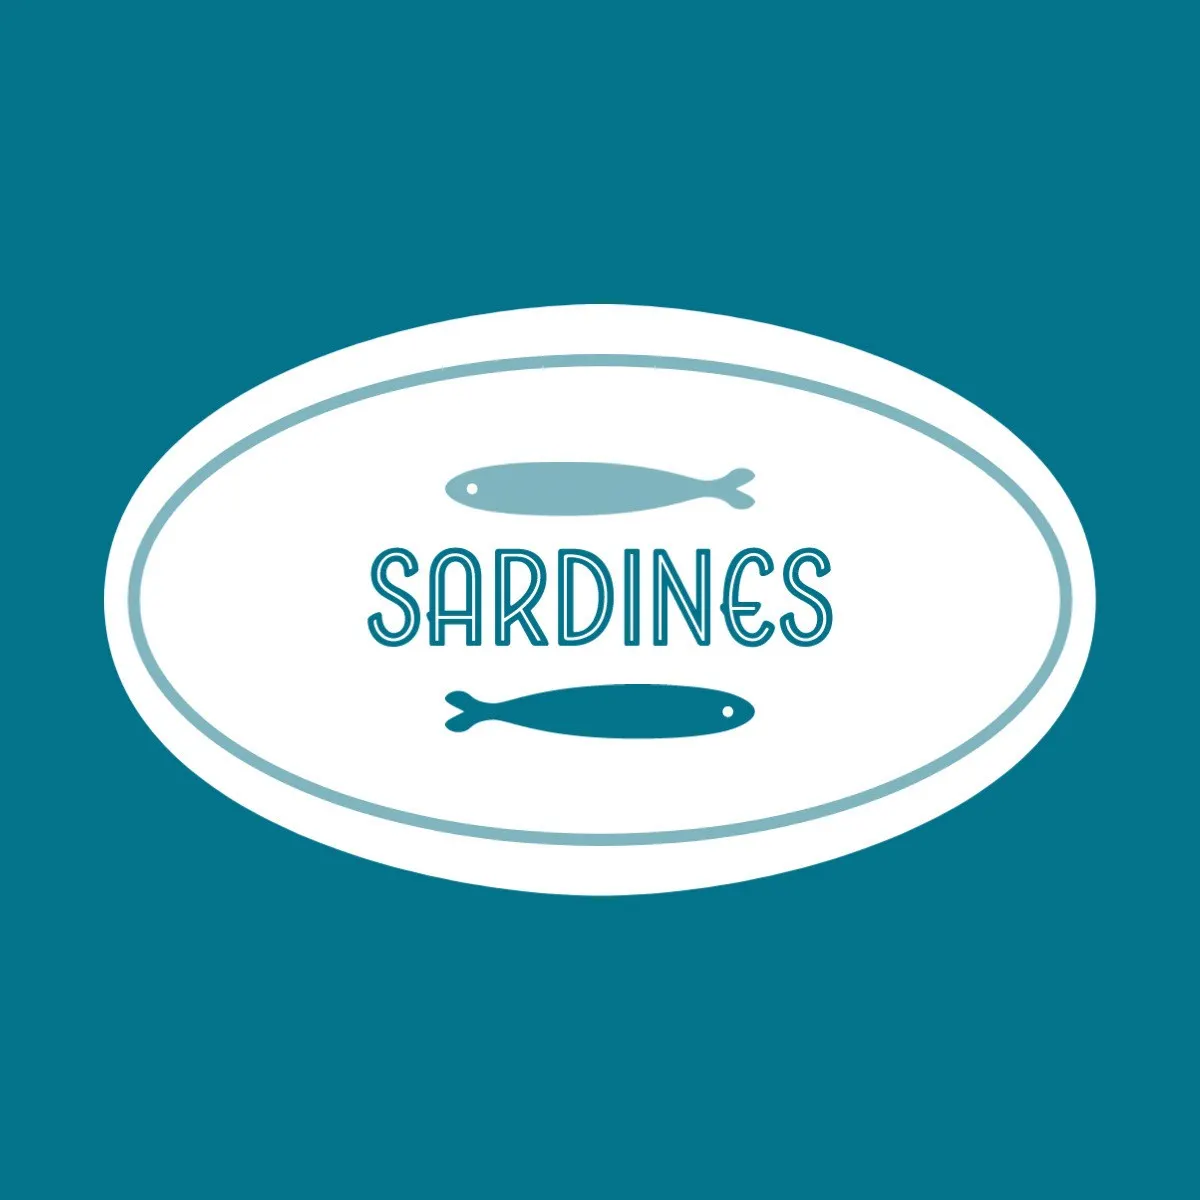 Blue And White Oval Sardines Logo